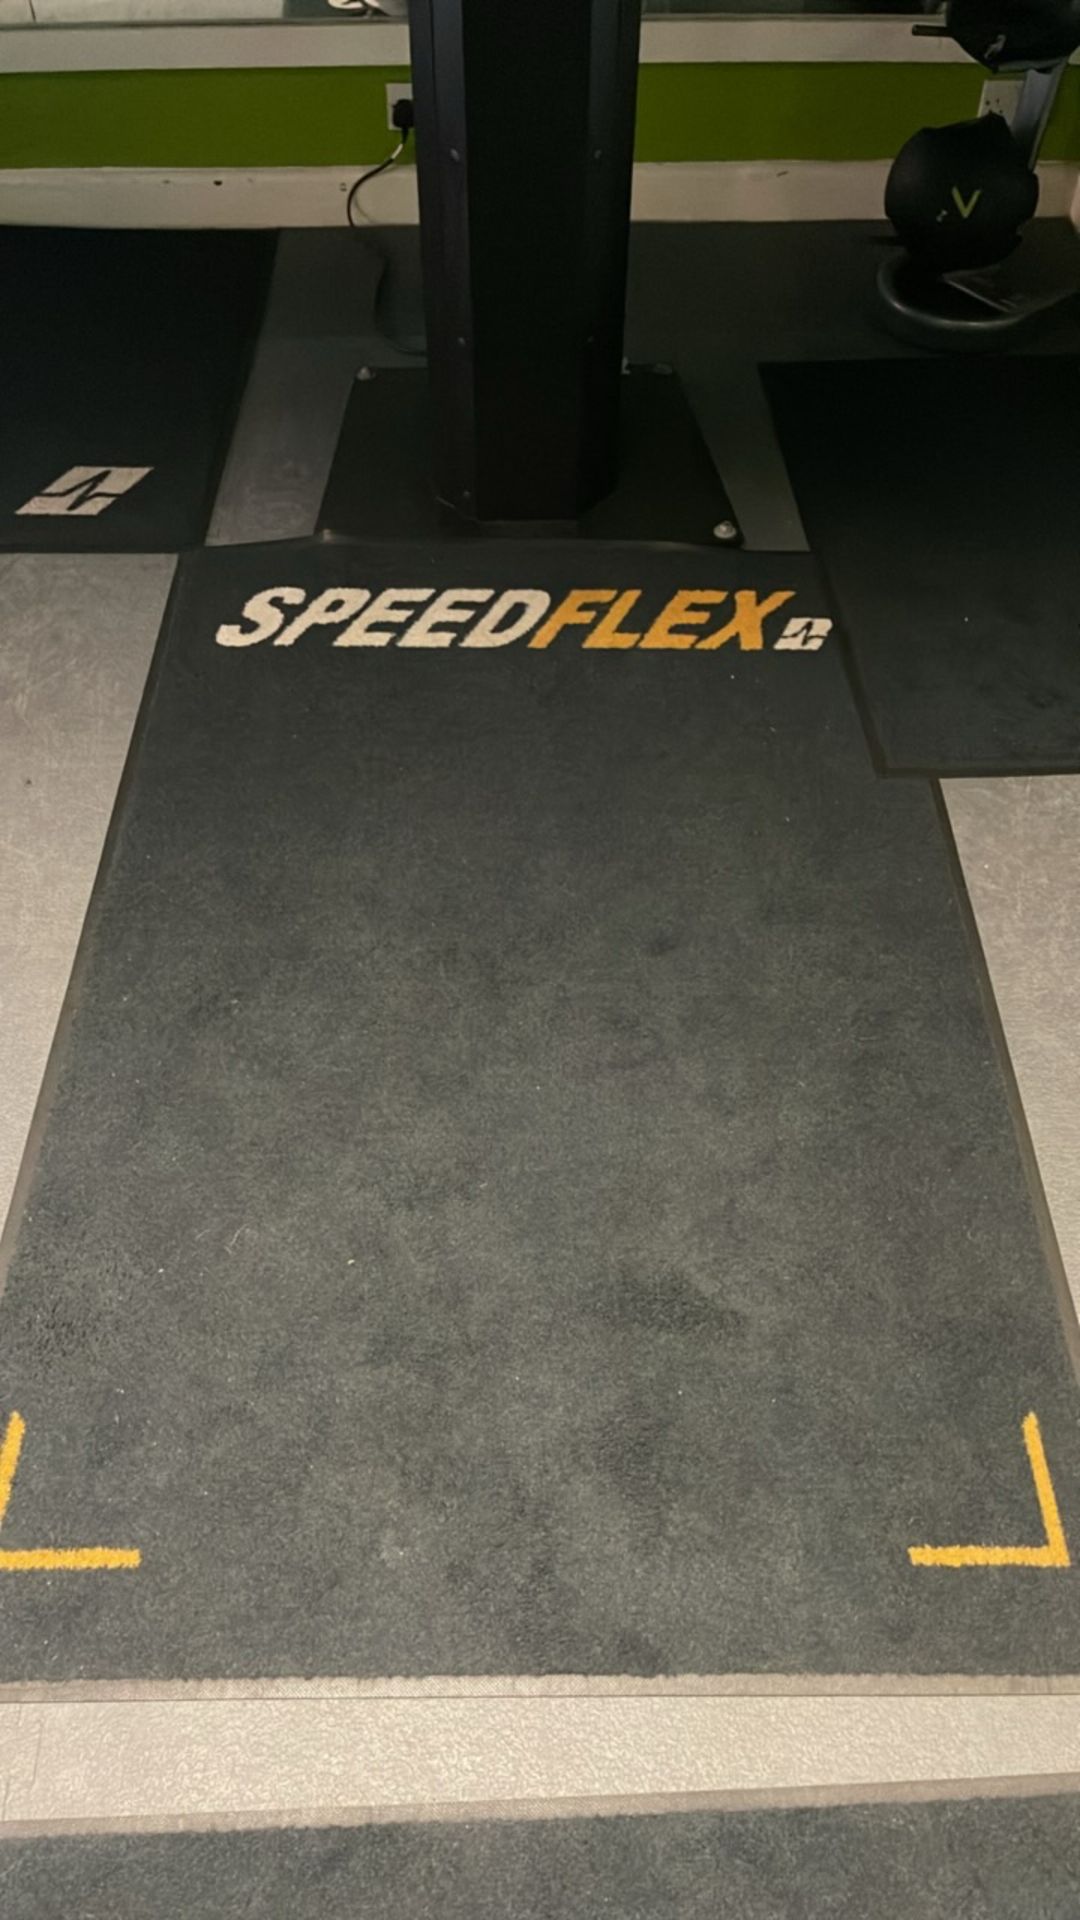 SpeedFlex Station - Image 5 of 6